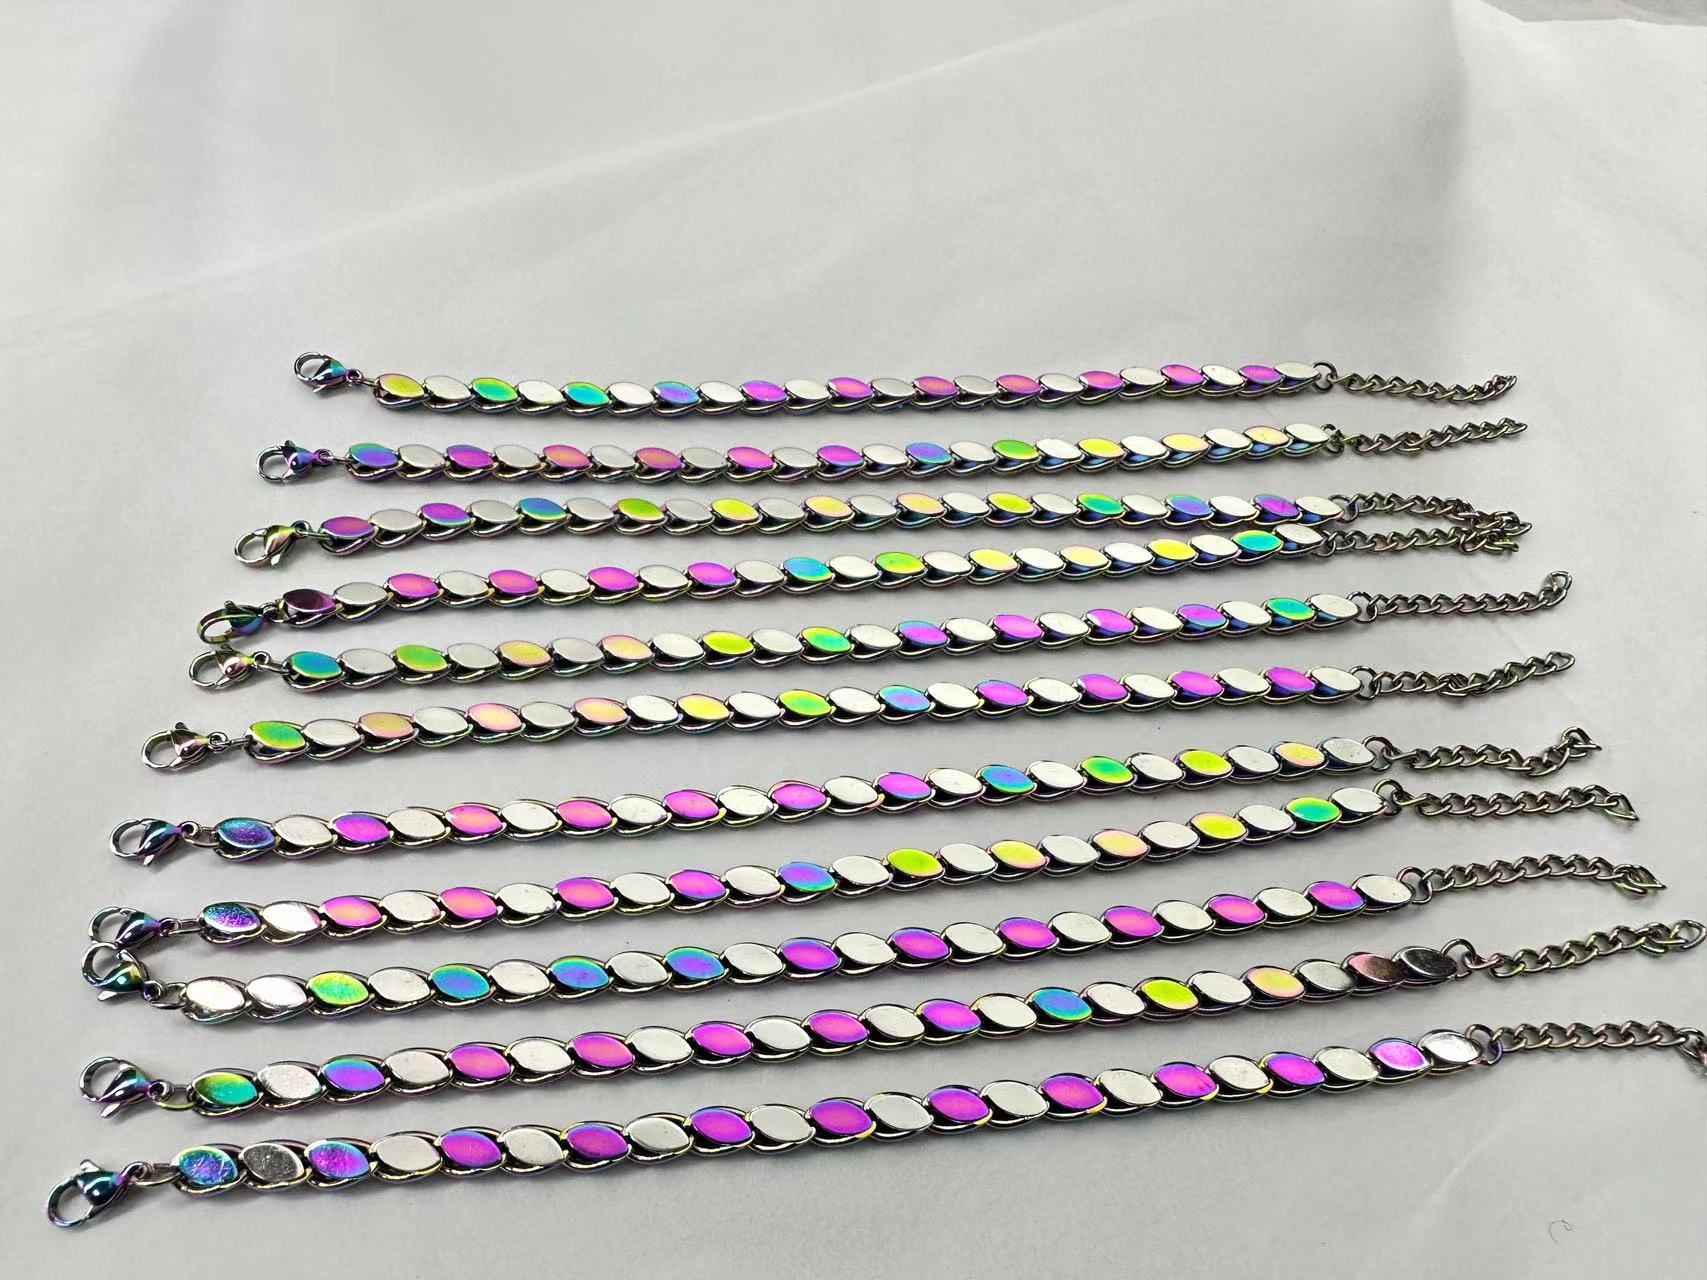 stainless steel bracelets wholesale in Yiwu market, China 2023